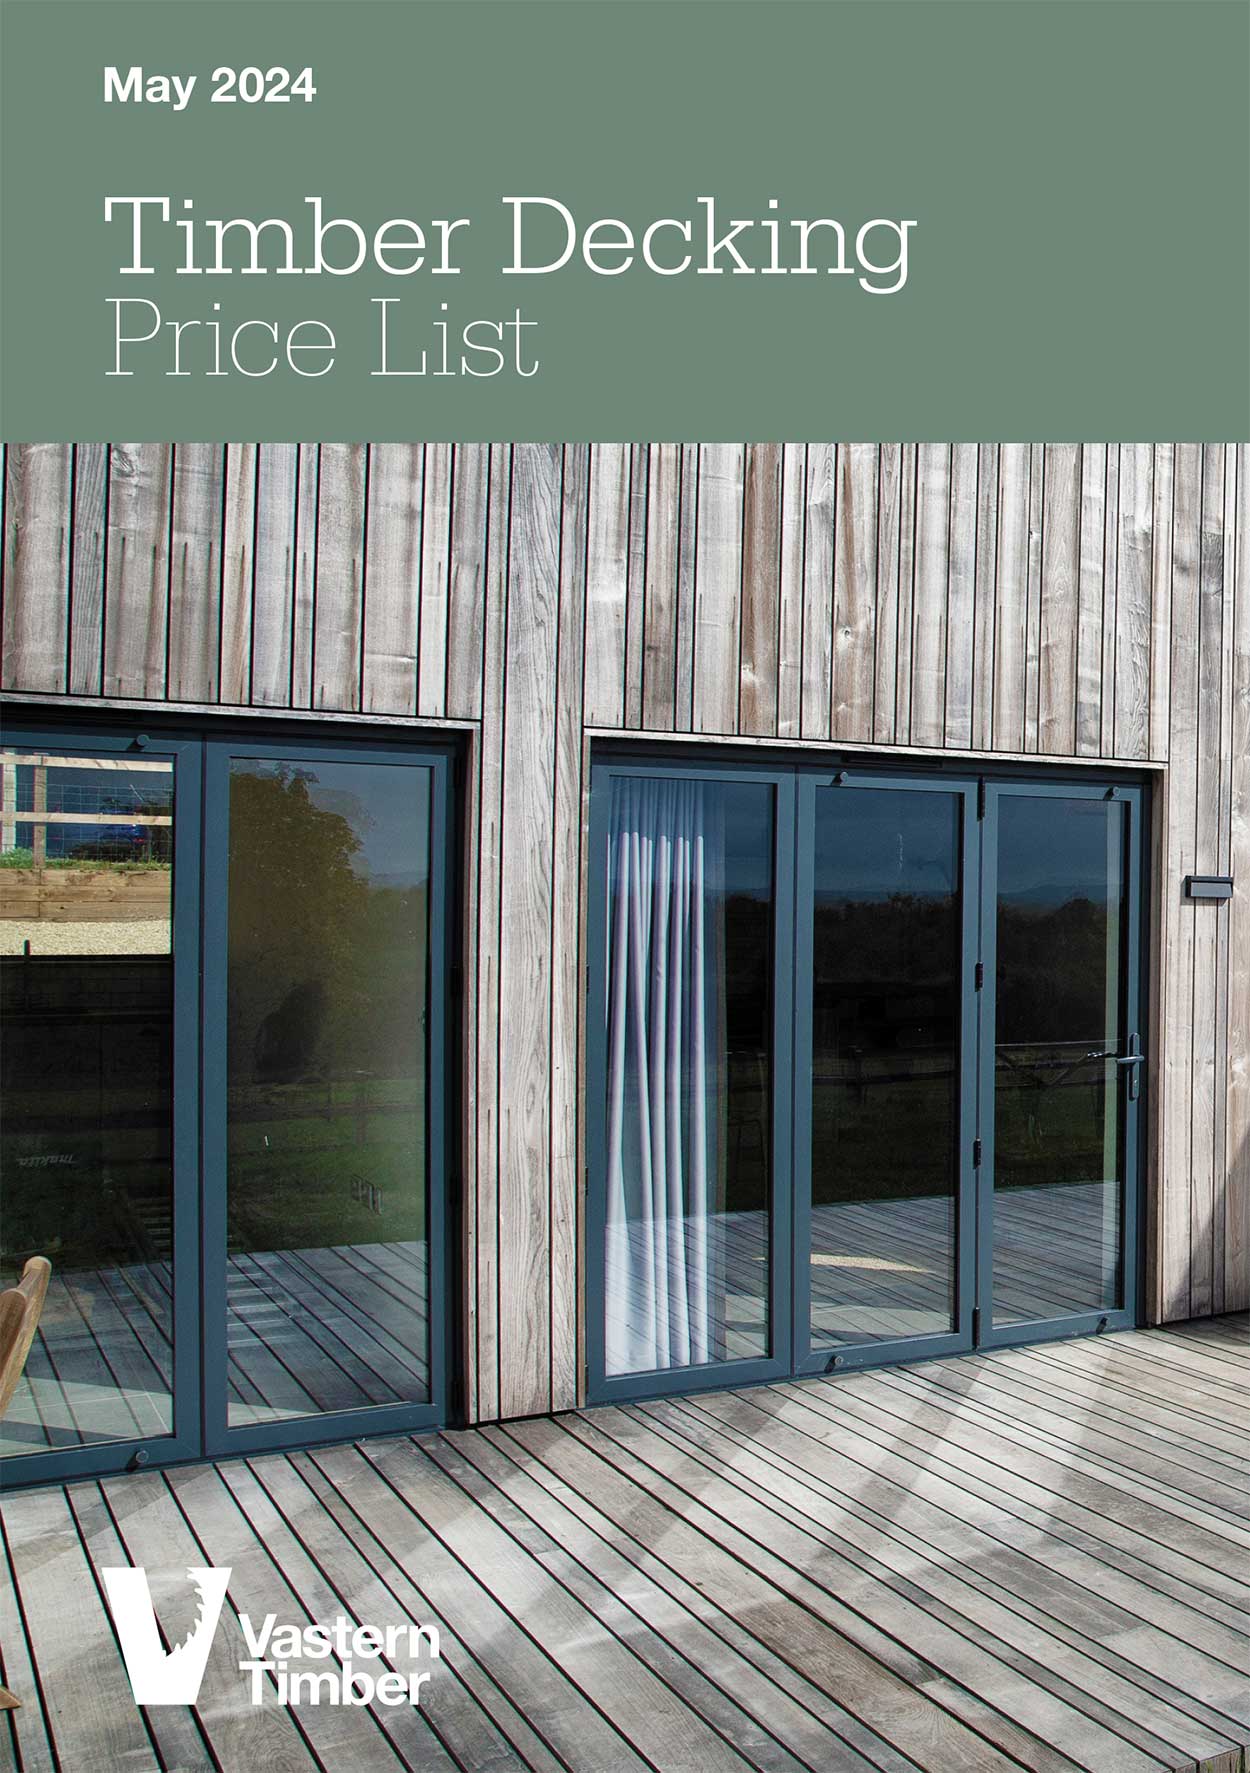 Timber Decking Price List